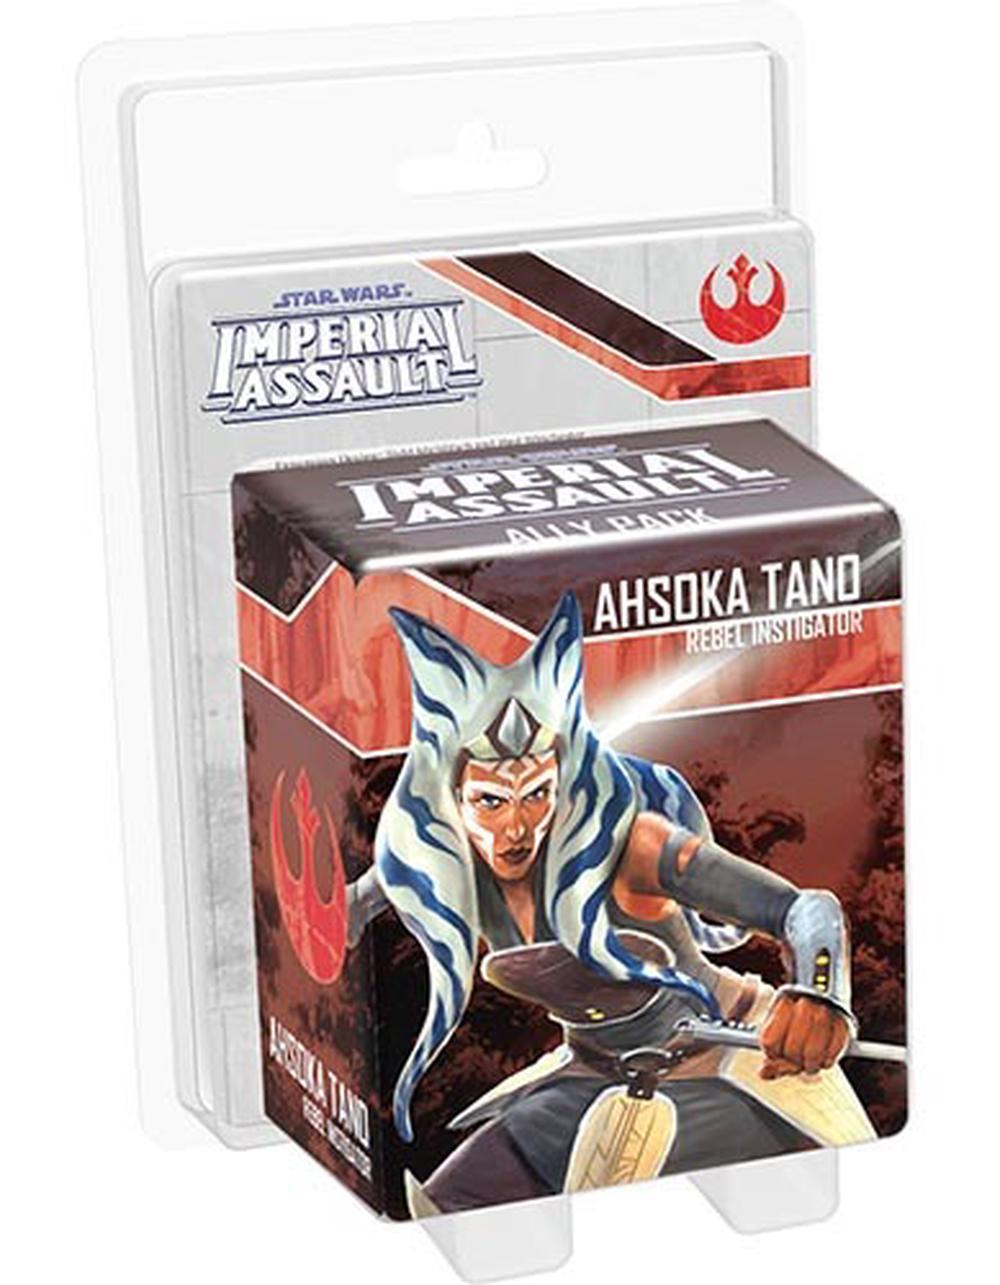 Fantasy Flight Games Star Wars Imperial Assault Ahsoka Tano Buy Online At The Nile 